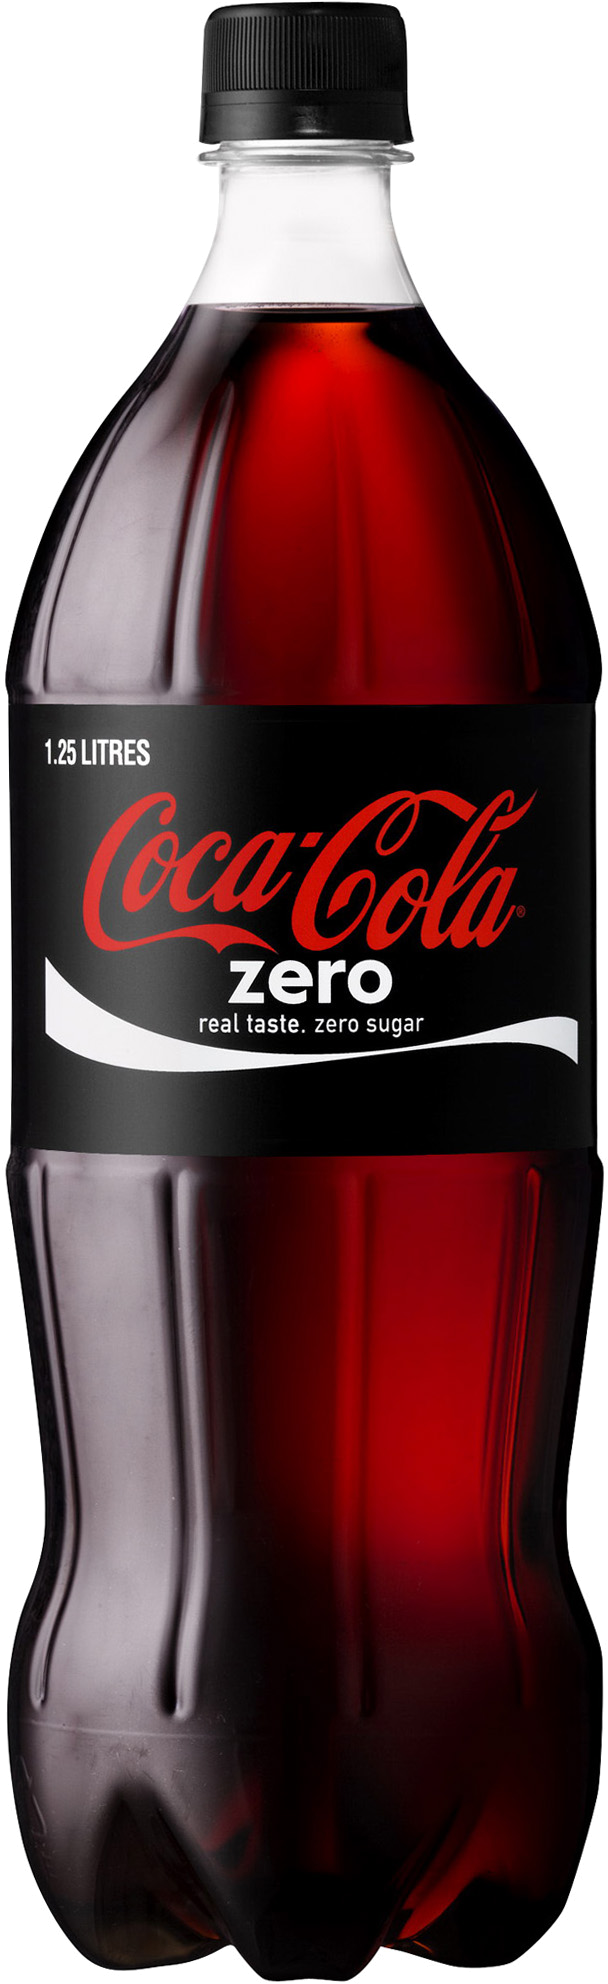 Coca cola zero bottle PNG image